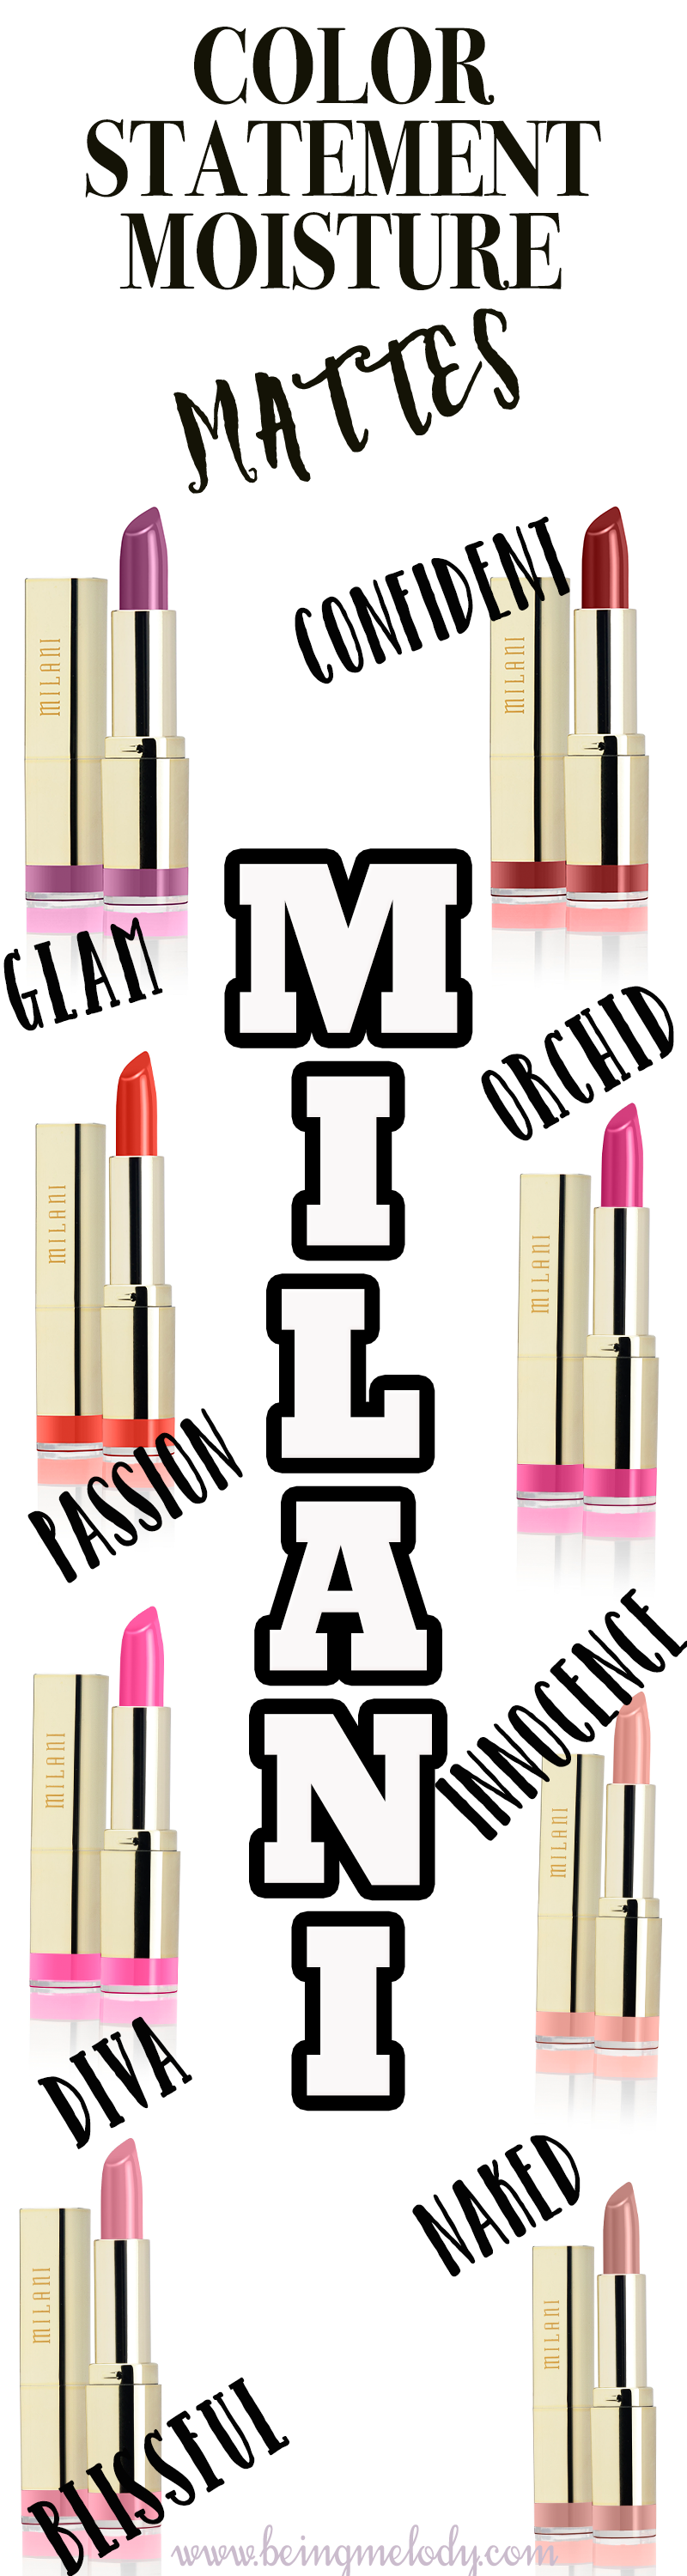 Milani Cosmetics Color Statement Moisture Matte Lipsticks for Spring 2015